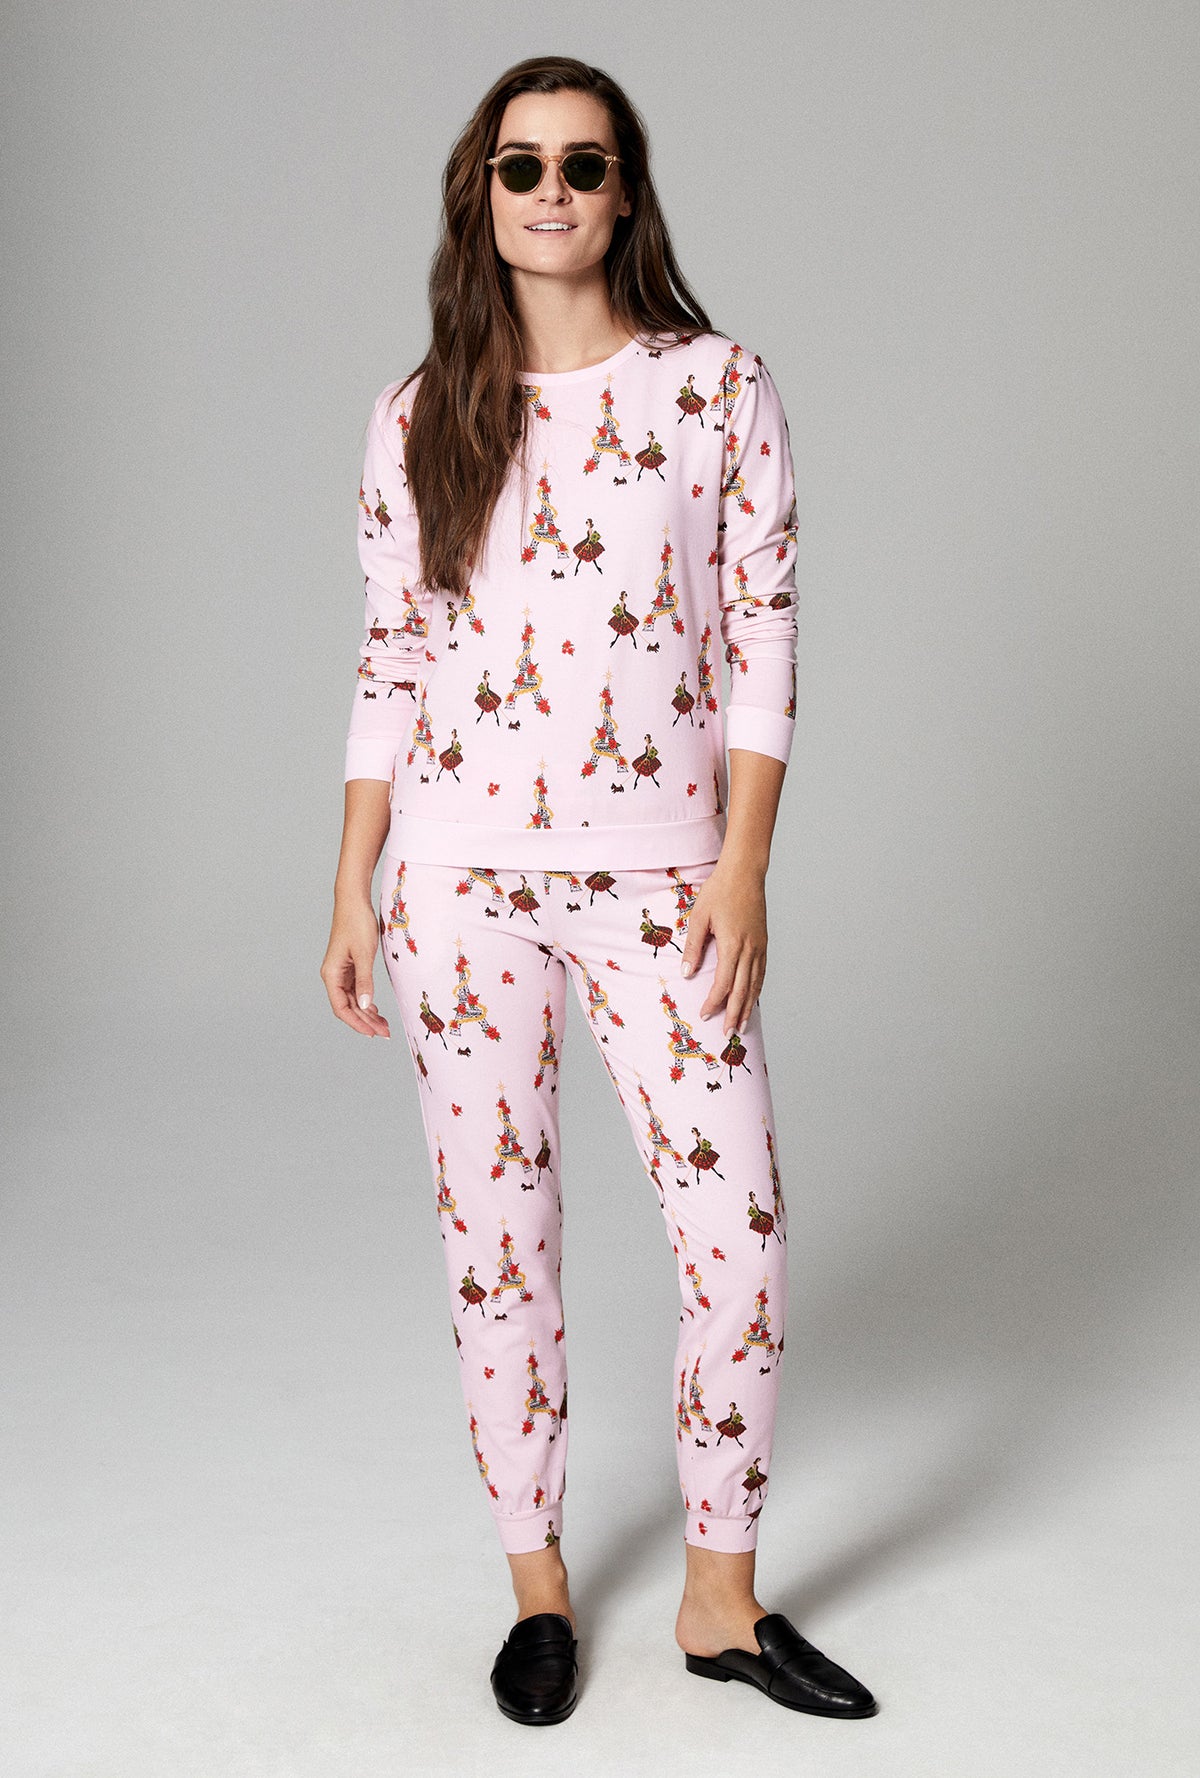 notch neck printed nightwear pyjama set